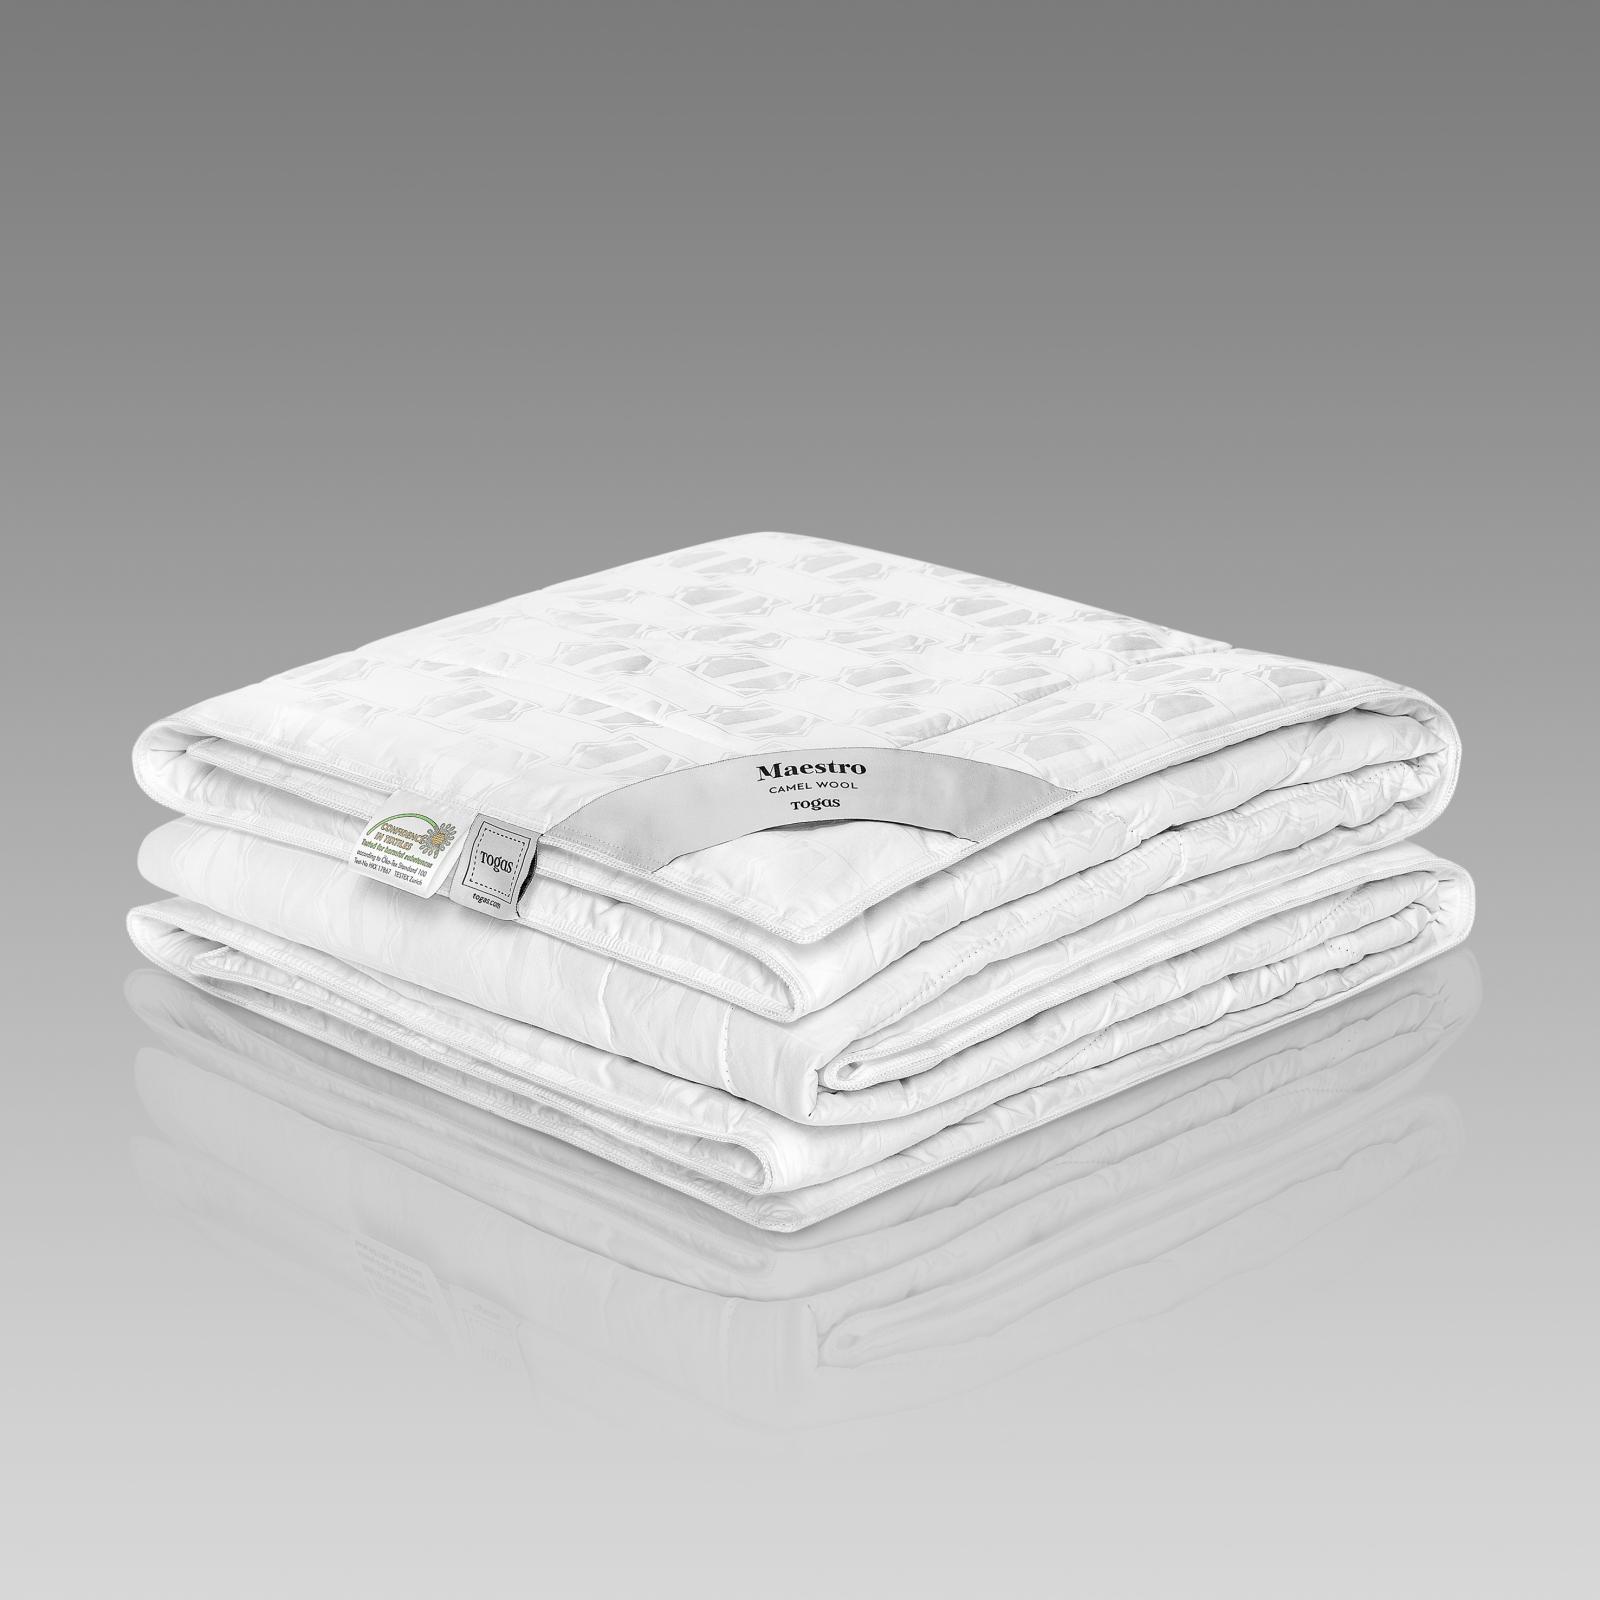 Одеяло Togas Маэстро белое 140х200 см (20.04.17.0088) одеяло louis pascal reina белое 140х200 см lp st